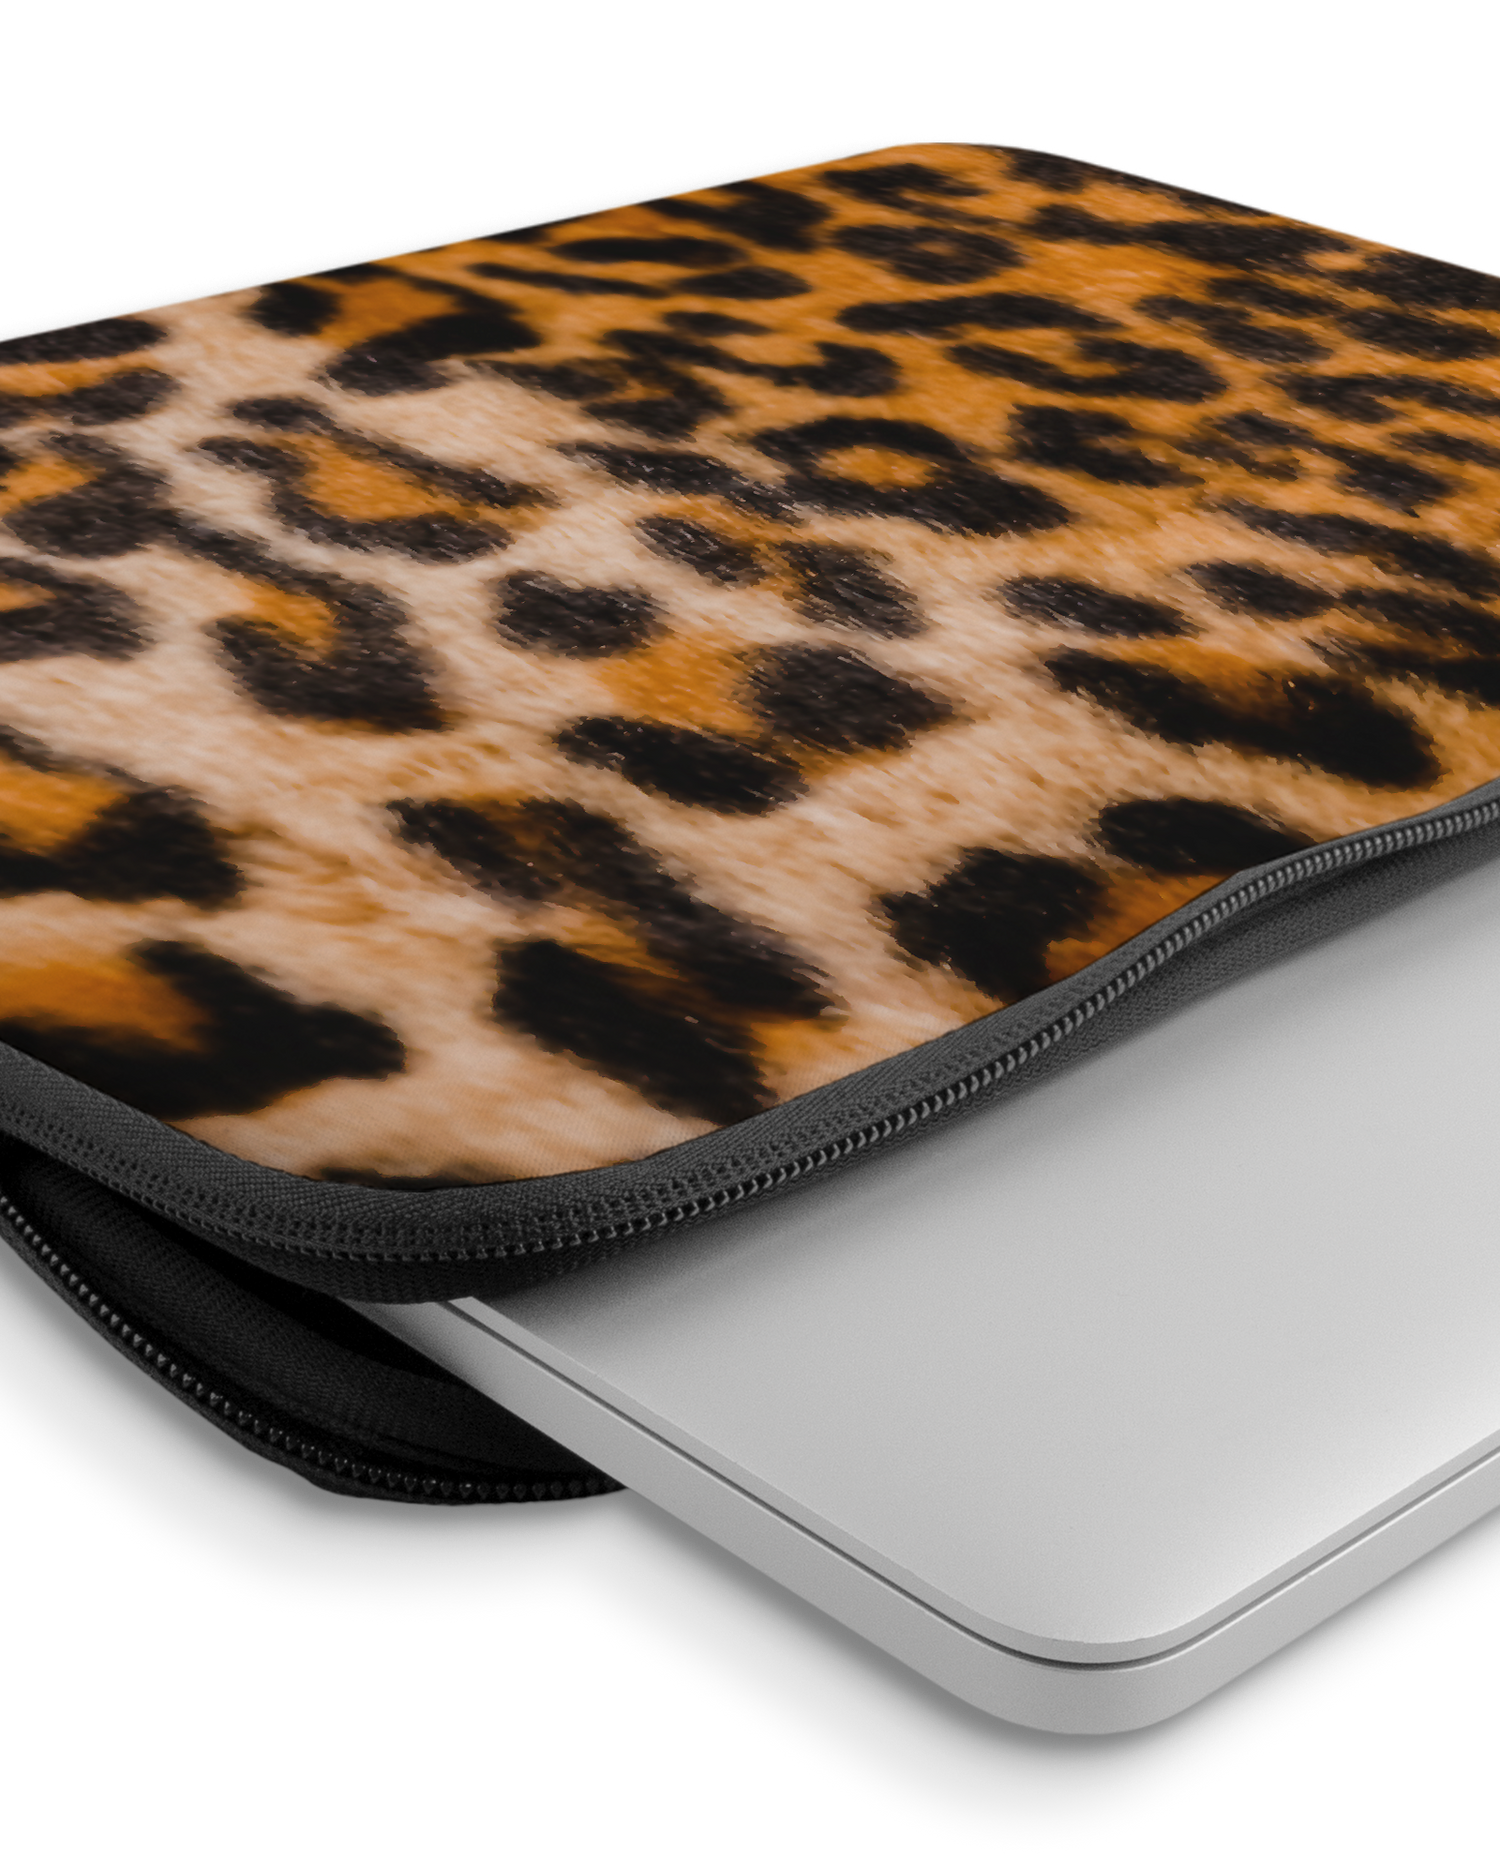 Leopard Pattern Laptop Case 14-15 inch with device inside